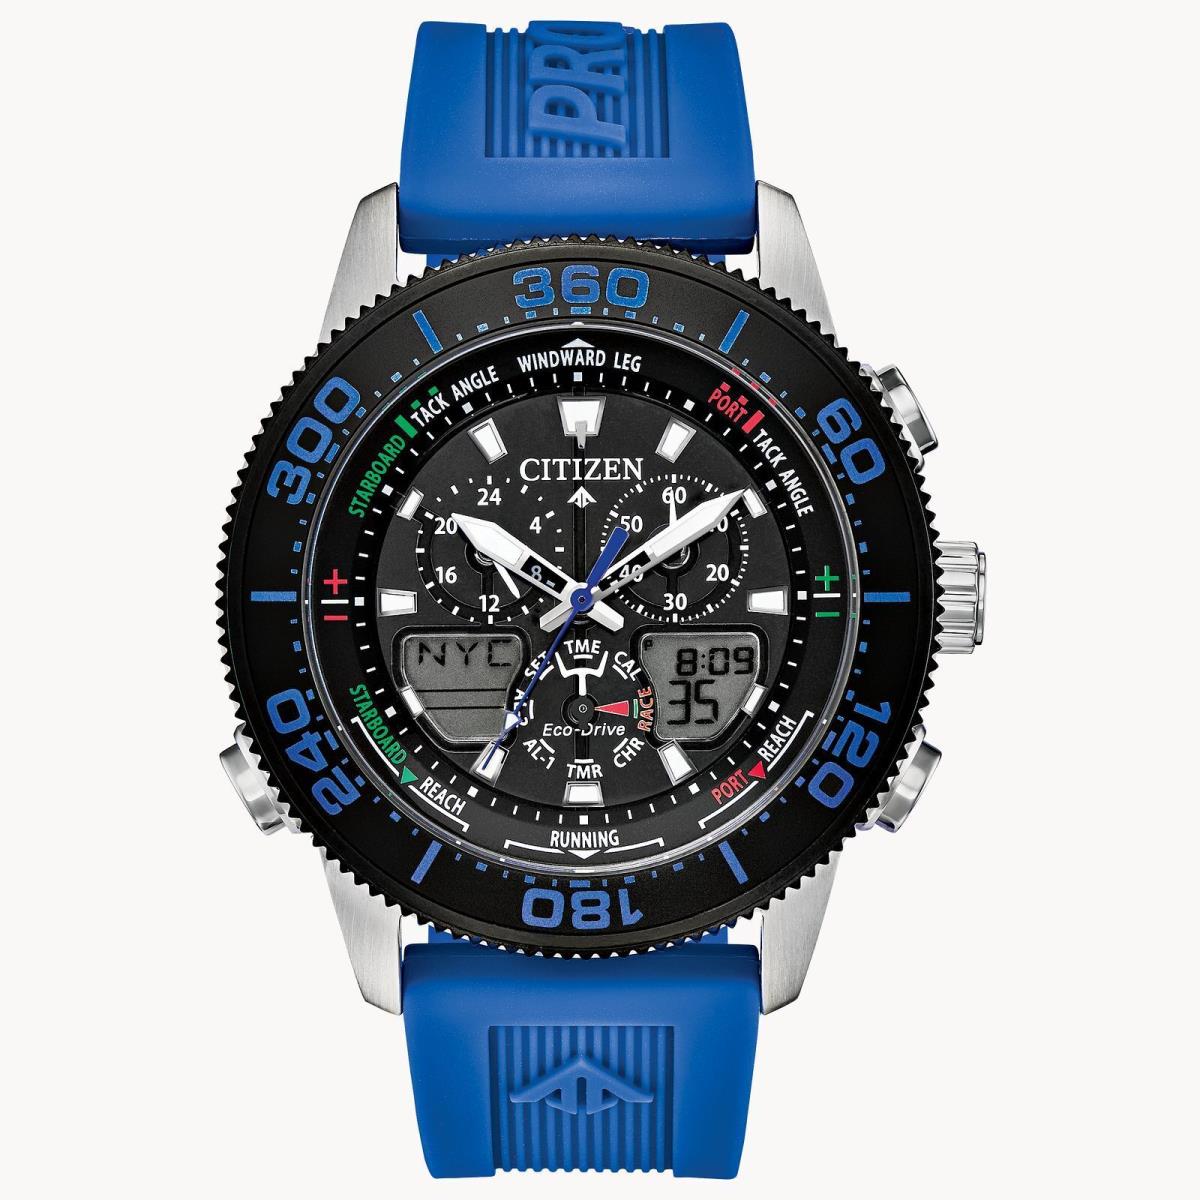 Citizen Eco-drive Promaster Sailhawk Timer World Time Men s Watch JR4068-01E - Dial: Black, Band: Blue, Bezel: Black